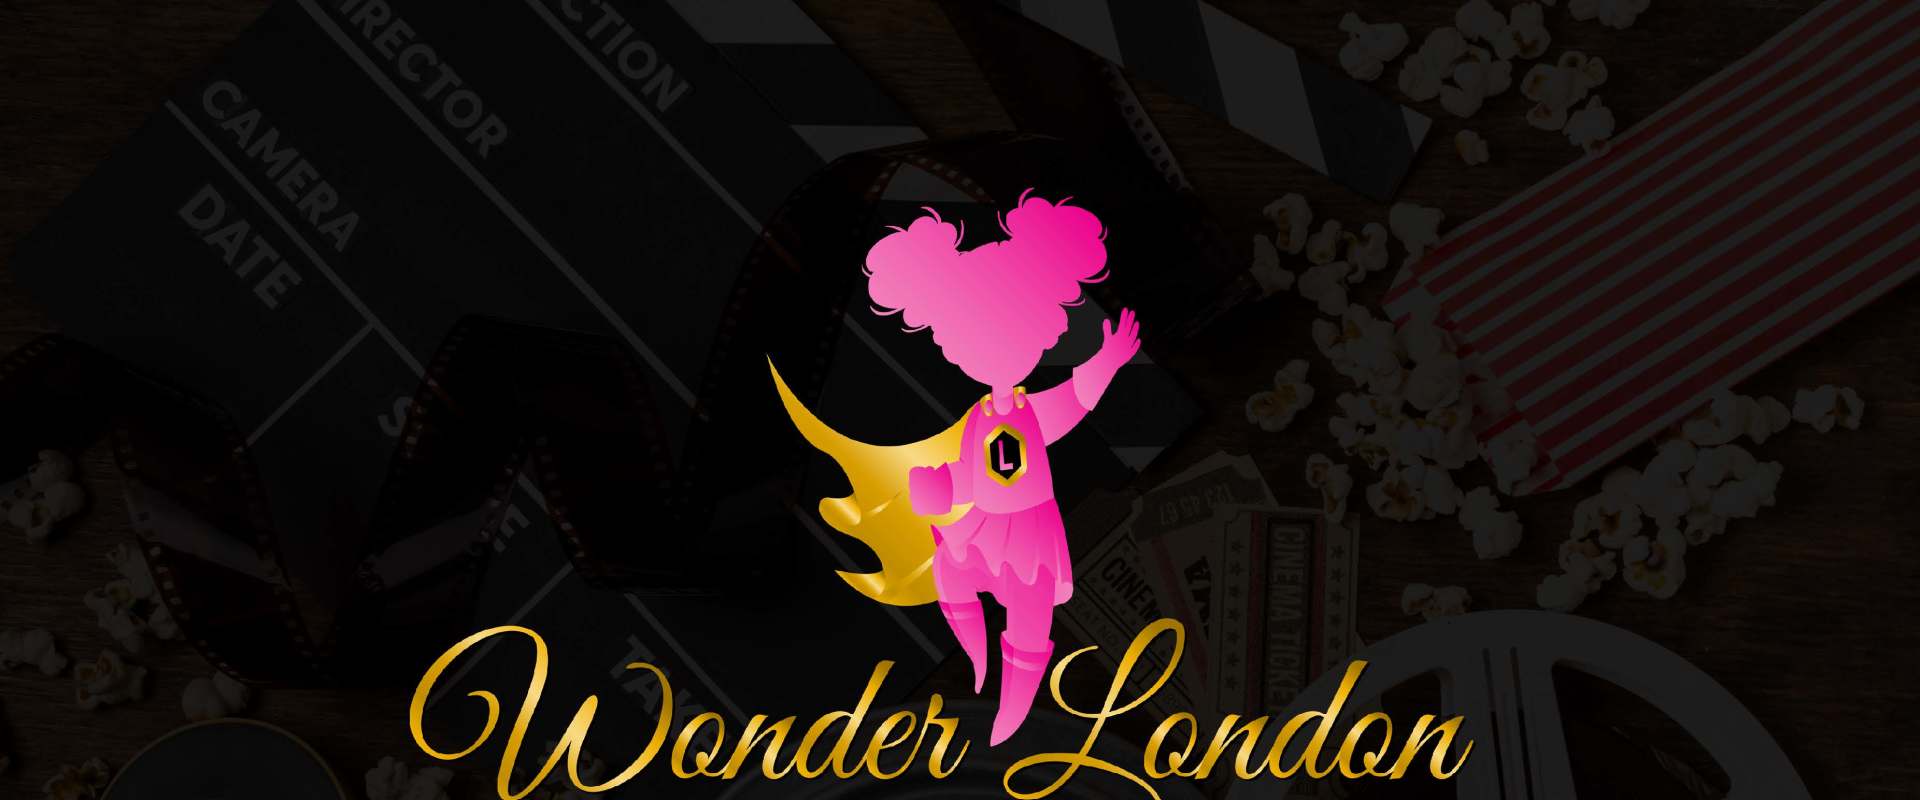 Wonder London background 1